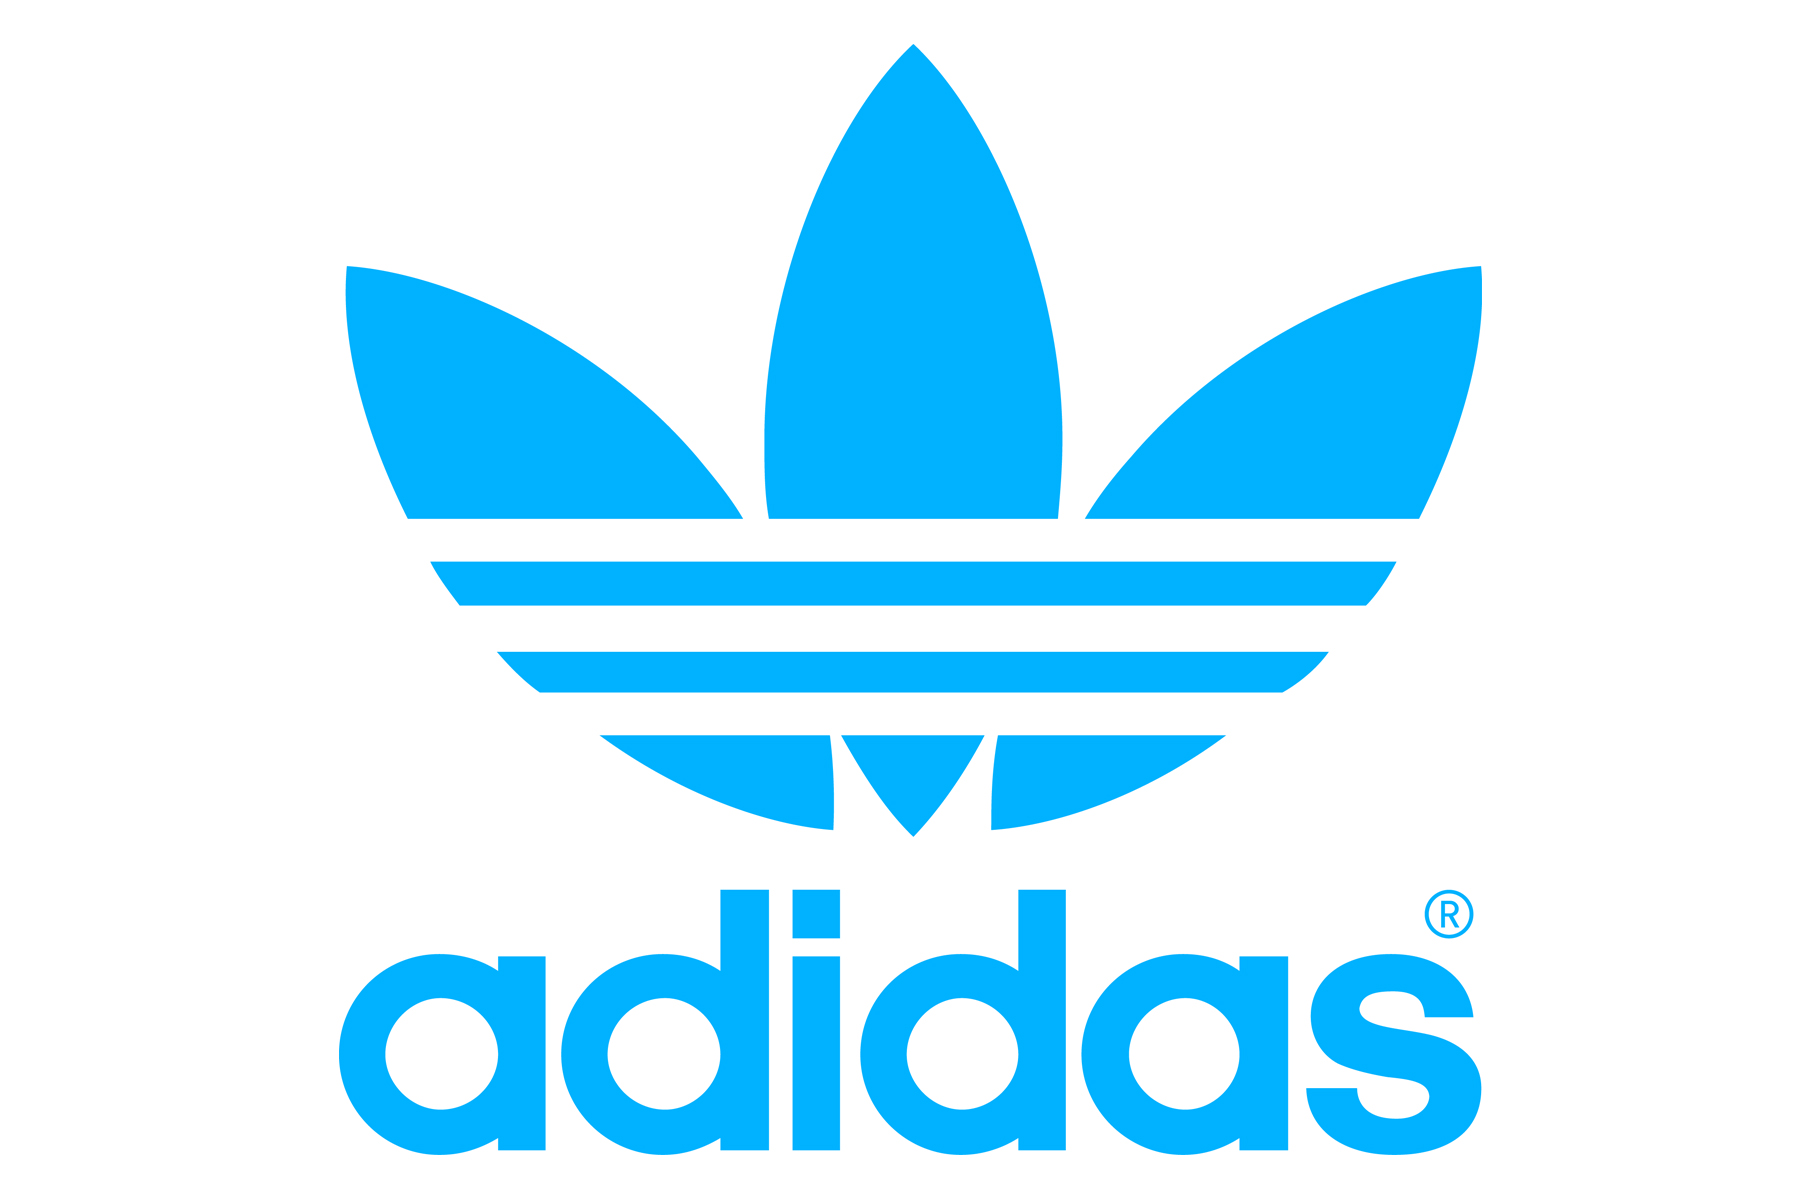 Adidas Flower Like Logo White Background - Download Links | Free ...